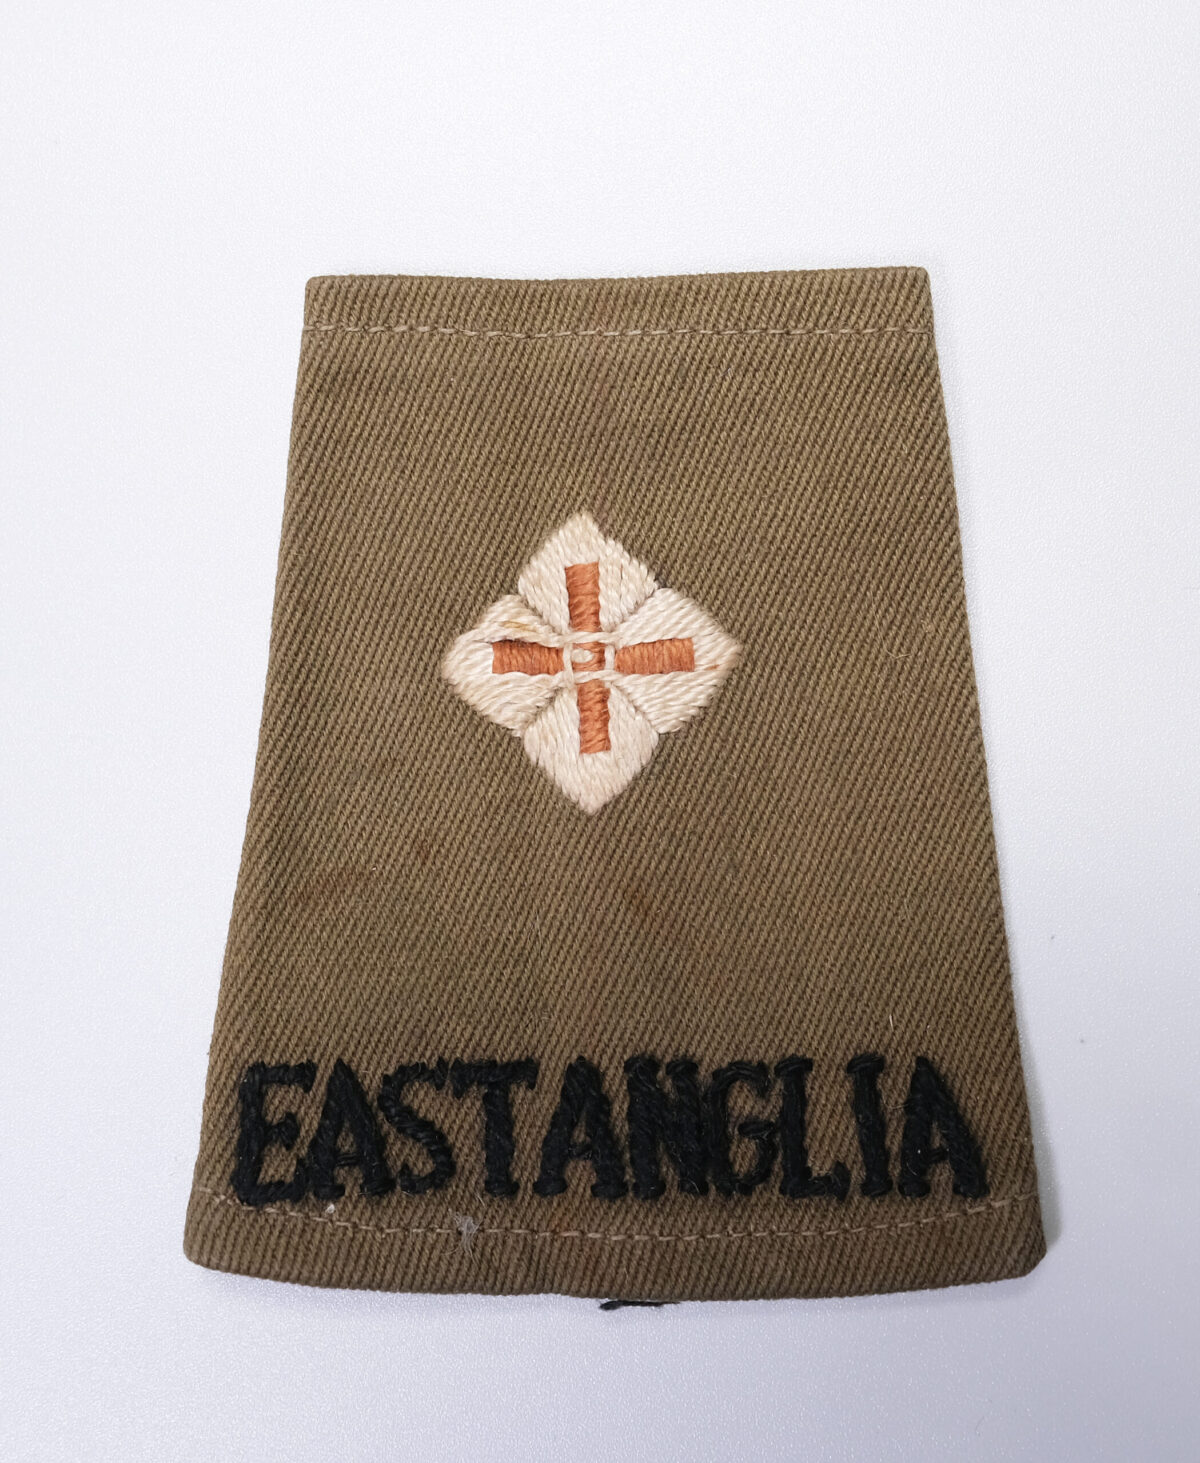 East Anglia Regiment 2nd Lieutenant rank slide